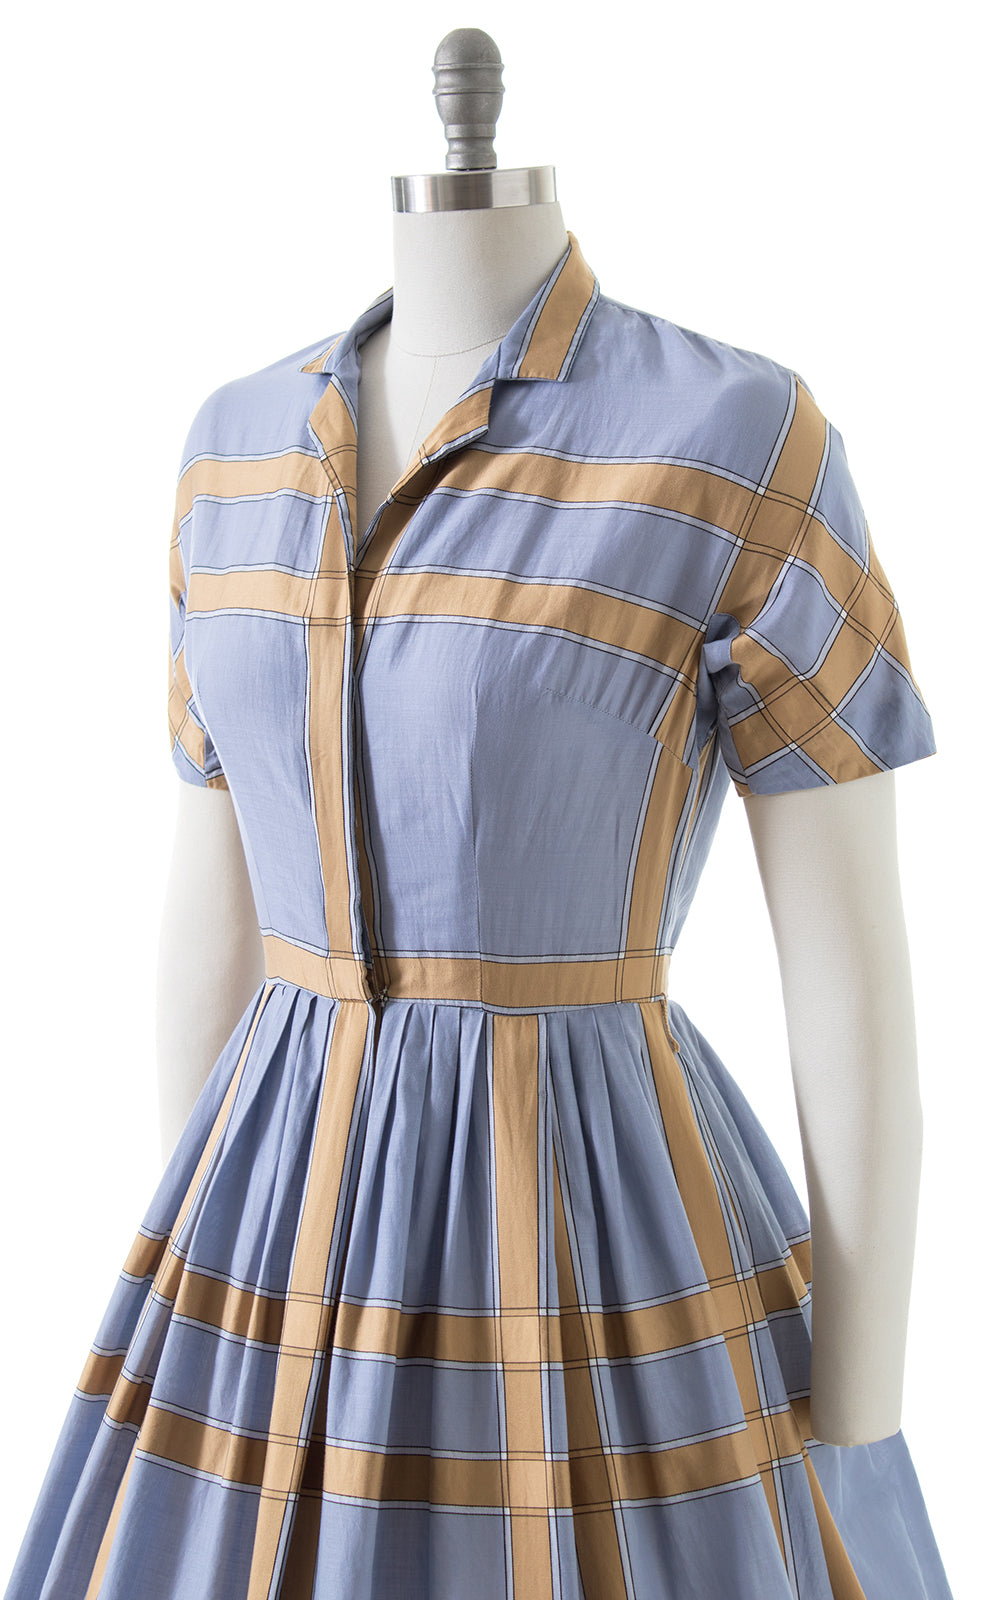 1950s Plaid Cotton Shirtwaist Dress